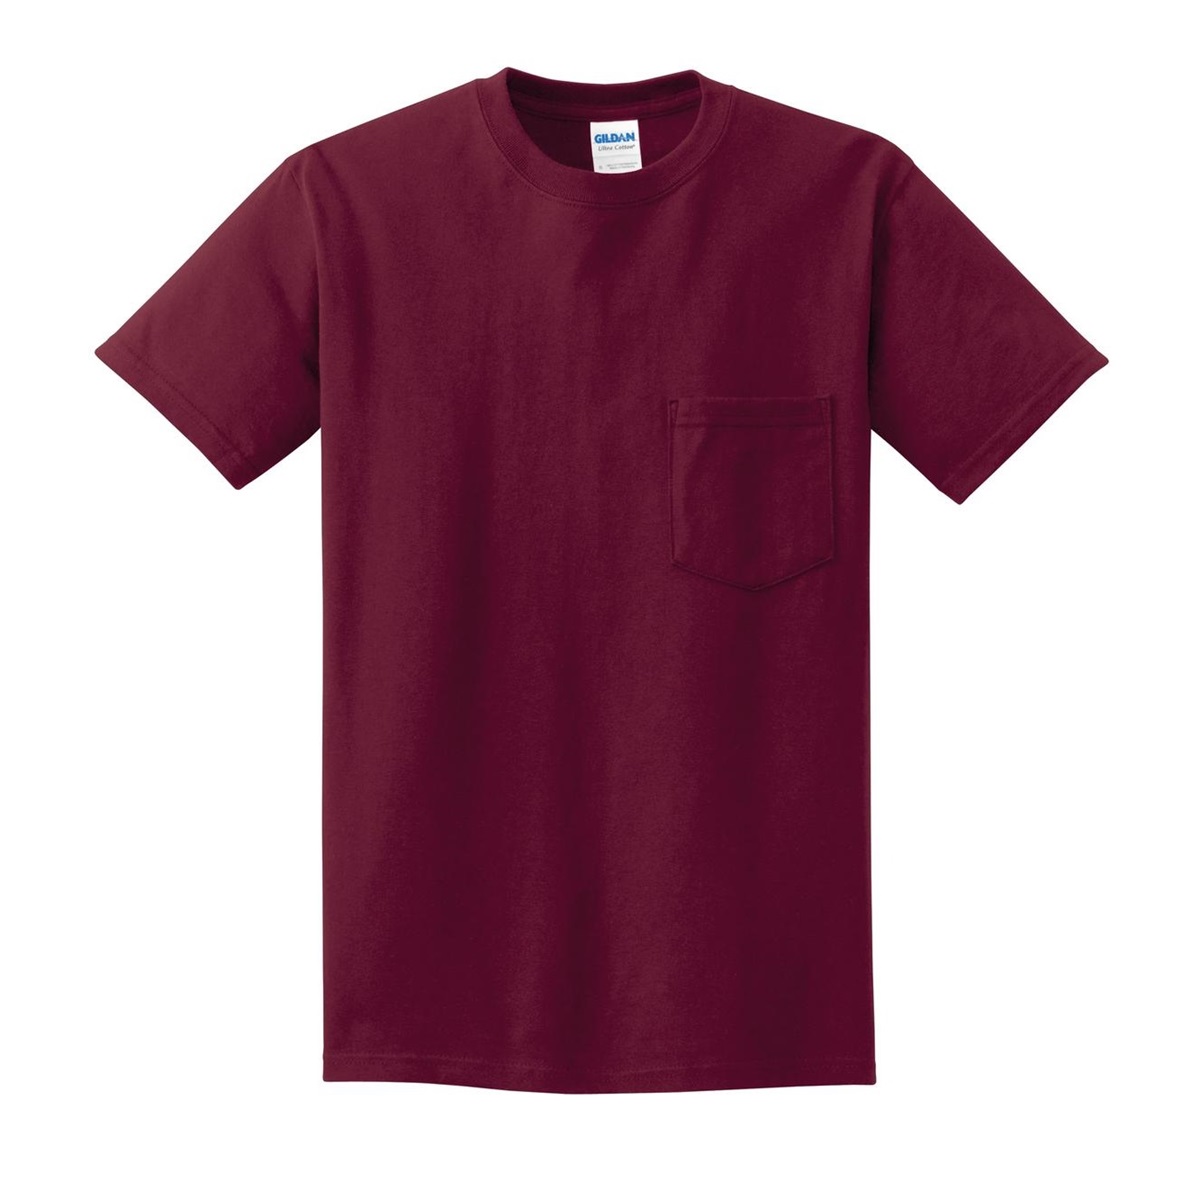  Gildan  2300 Ultra Cotton T Shirt with Pocket Maroon  